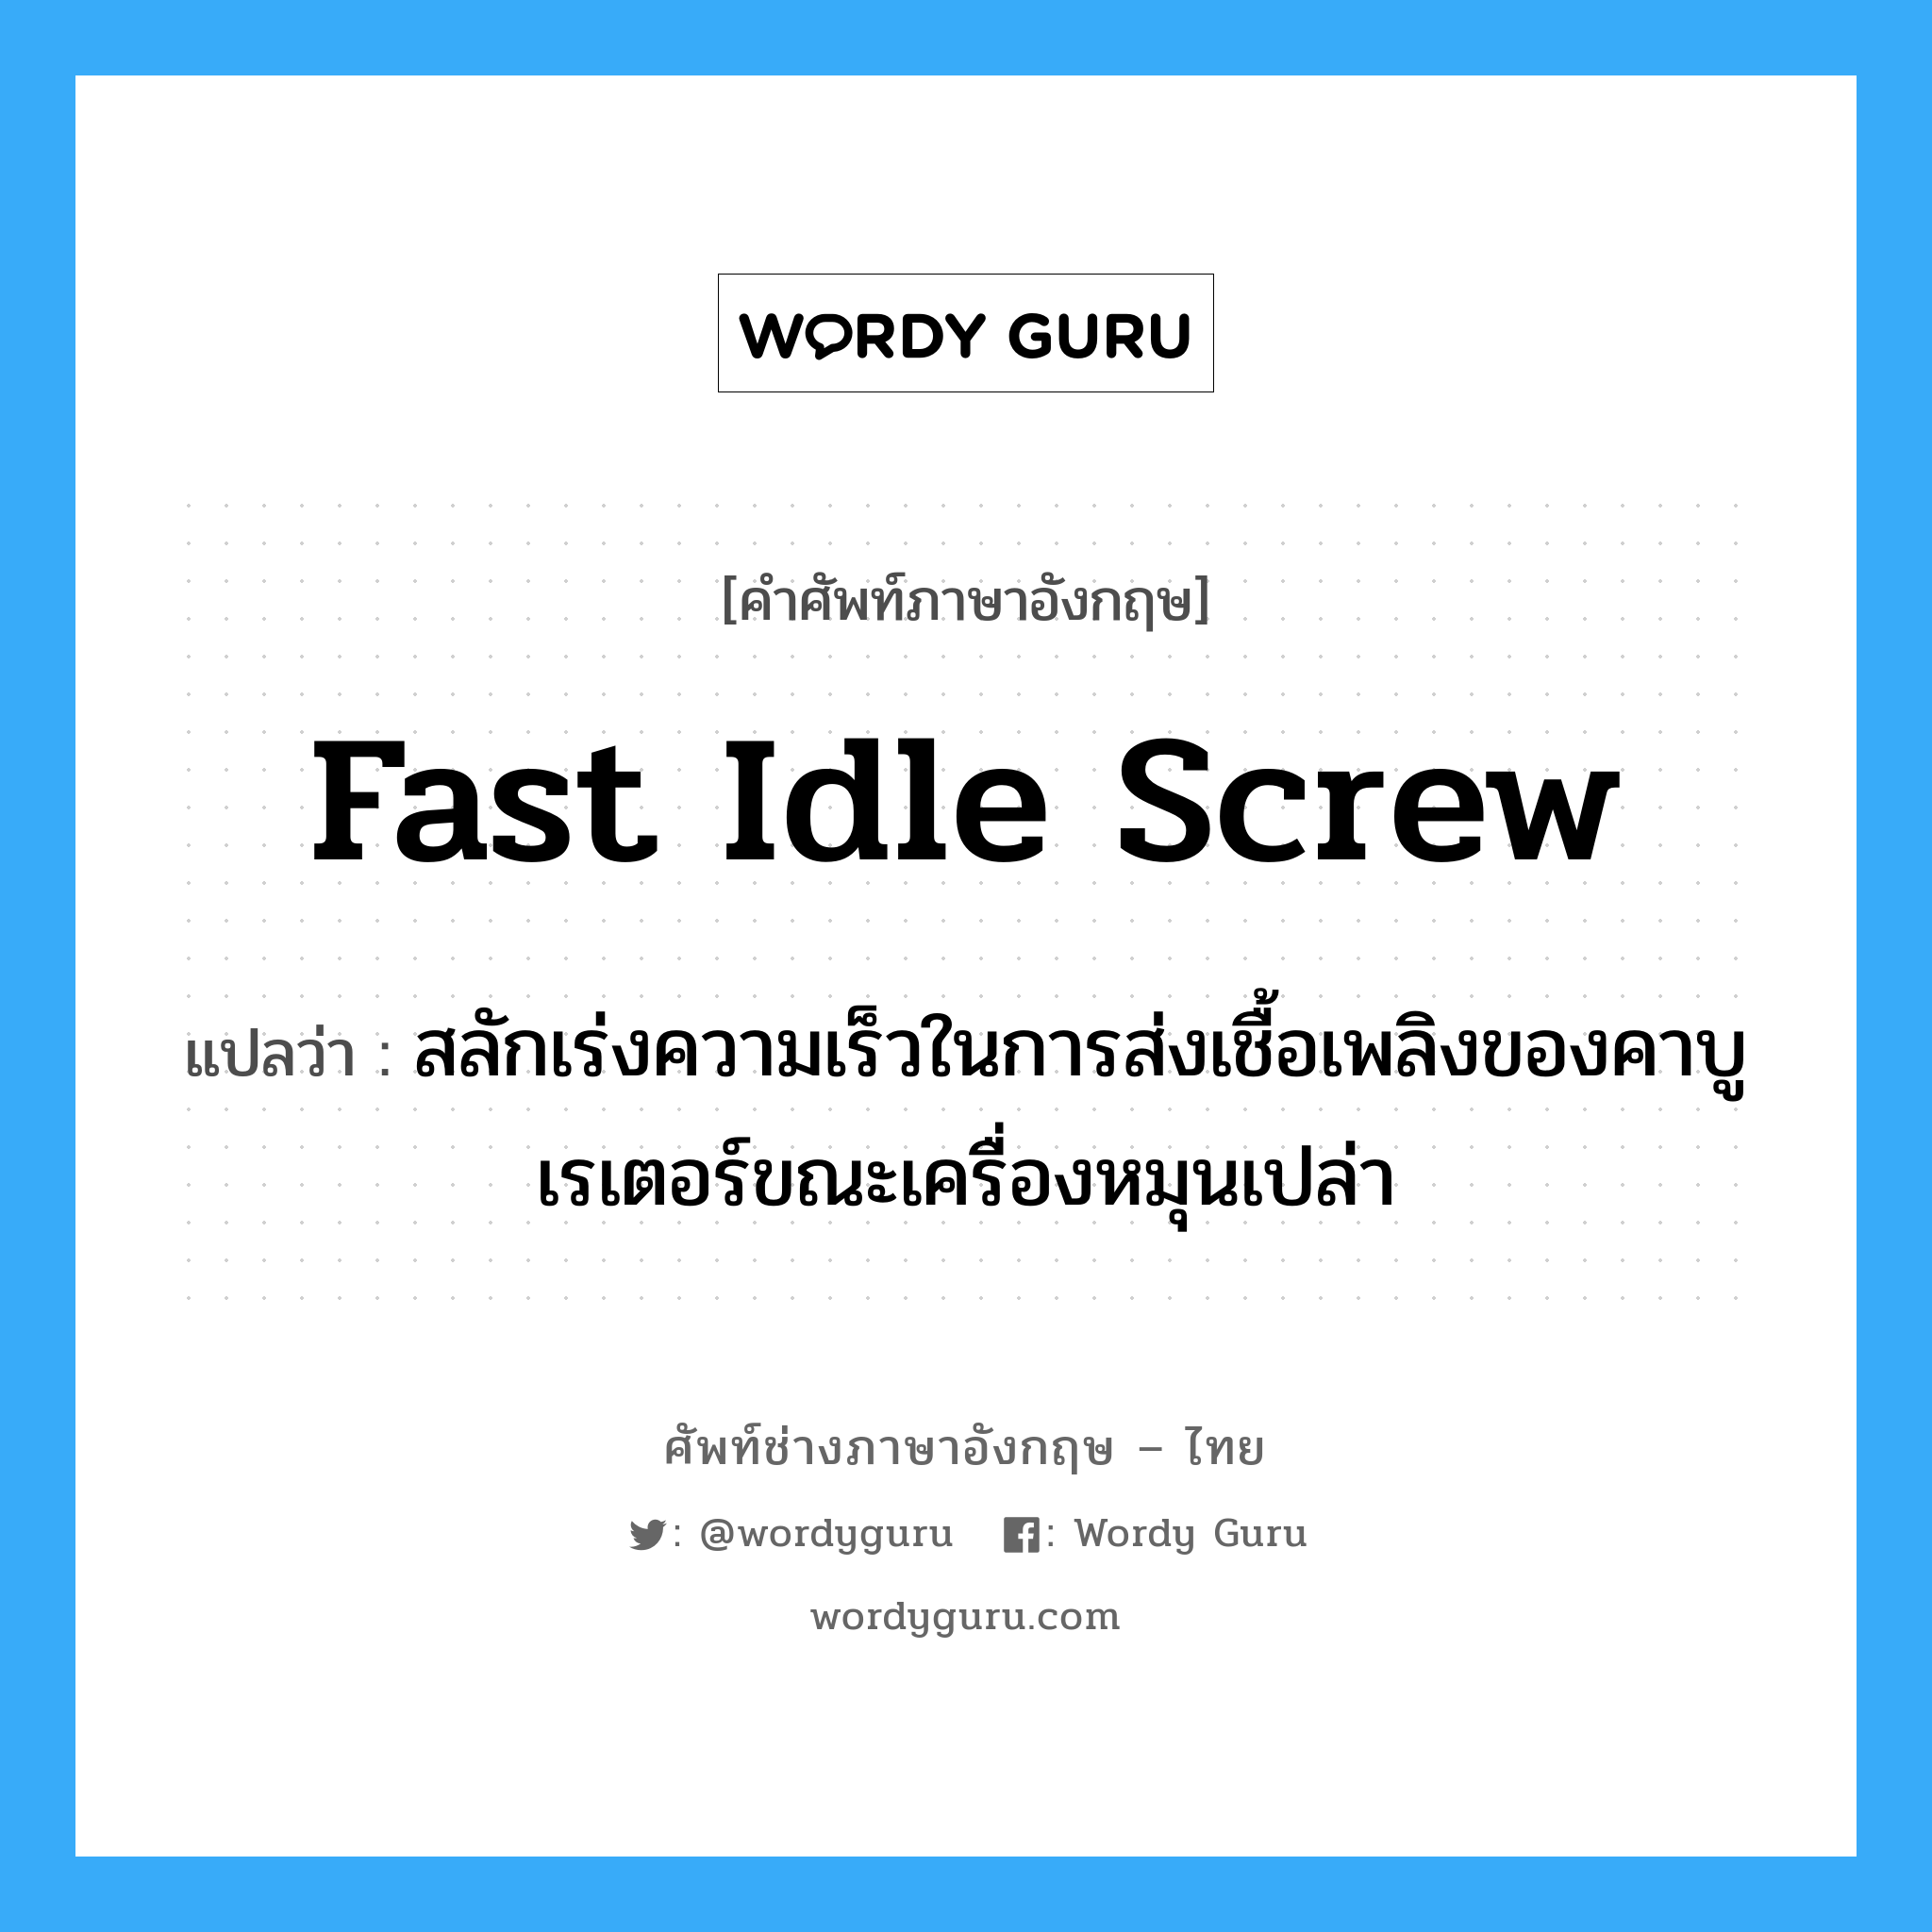 fast idle screw แปลว่า?, คำศัพท์ช่างภาษาอังกฤษ - ไทย fast idle screw คำศัพท์ภาษาอังกฤษ fast idle screw แปลว่า สลักเร่งความเร็วในการส่งเชื้อเพลิงของคาบูเรเตอร์ขณะเครื่องหมุนเปล่า